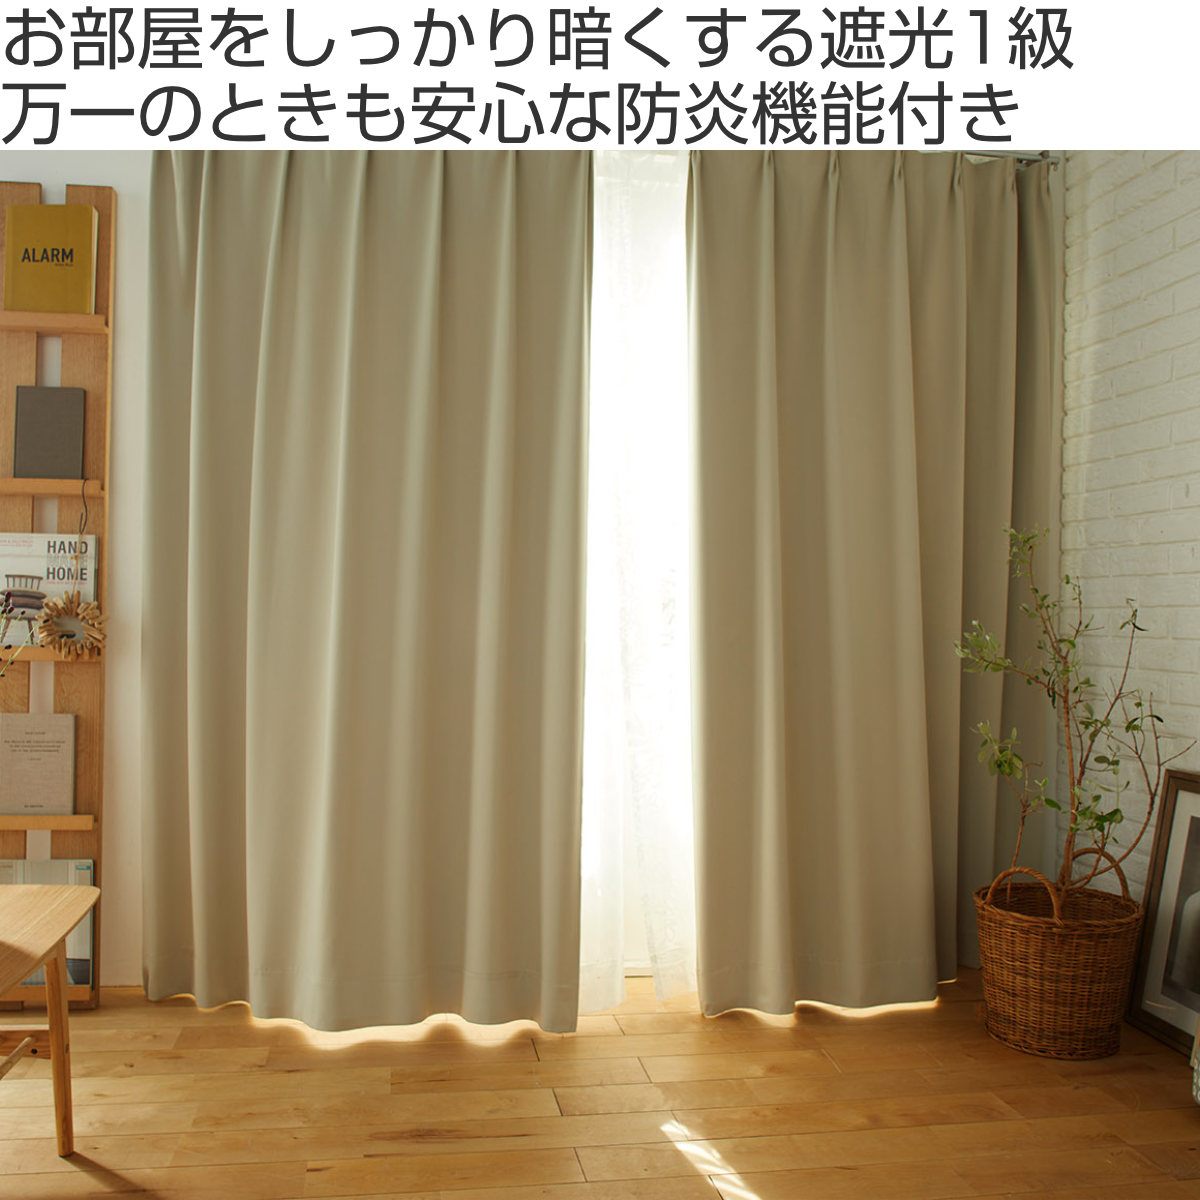 dショッピング |カーテン 遮光1級 スミノエ プライム2 100×135cm